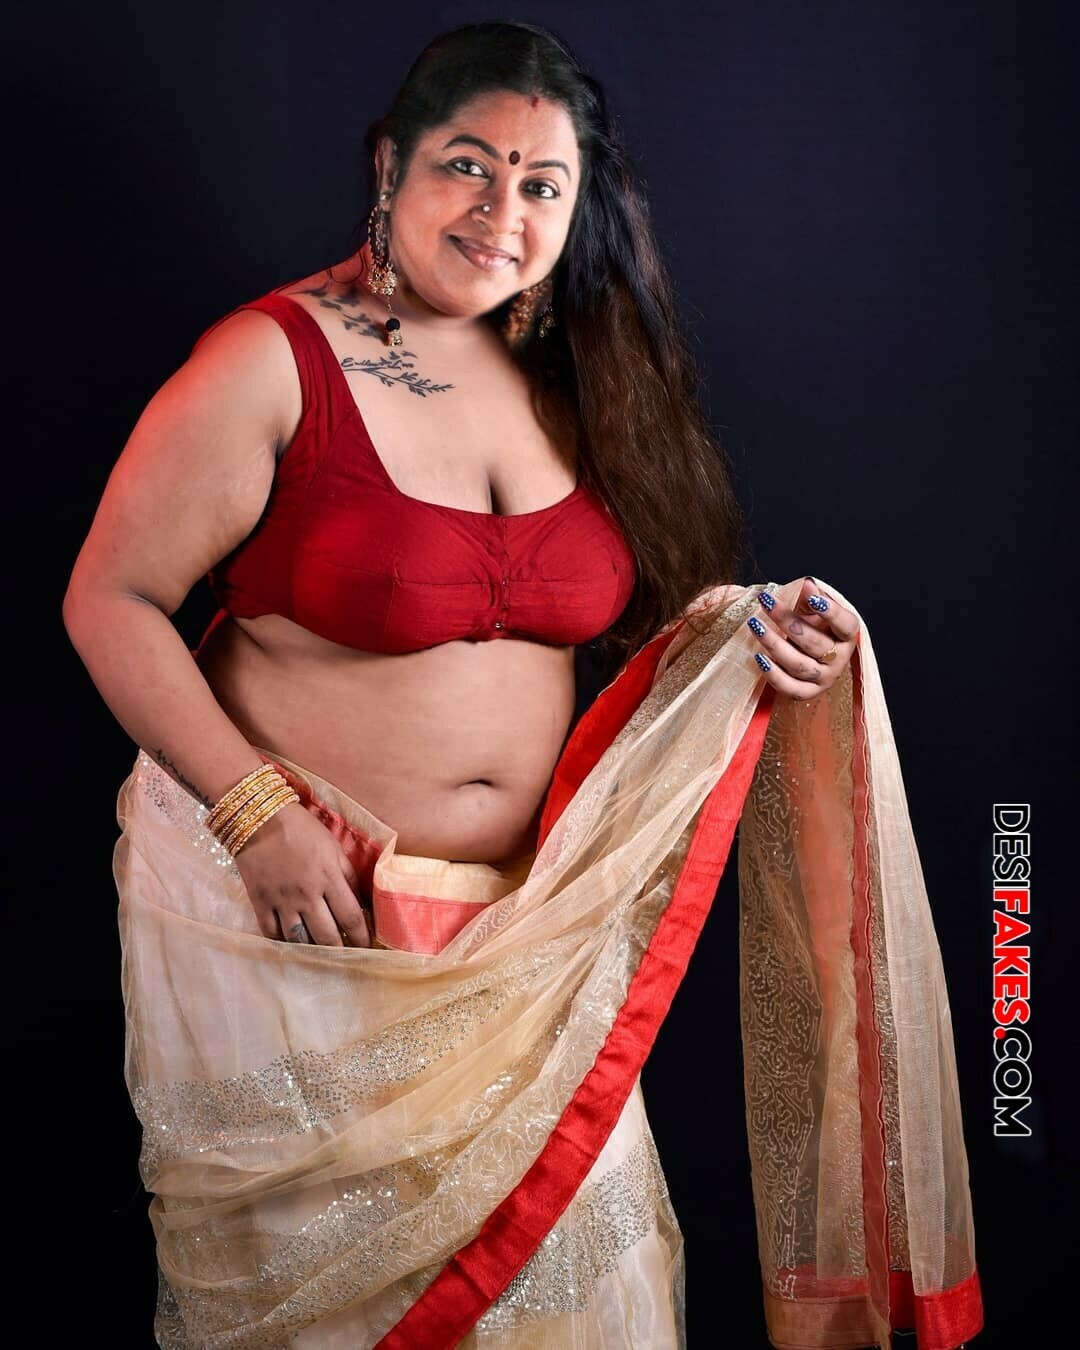 Heroine Telugu Busty Fuck - Telugu/Tamil/All other mature actresses - Movies/TV/Real life - Telugu  Actress - | Page 9 | Desifakes.com